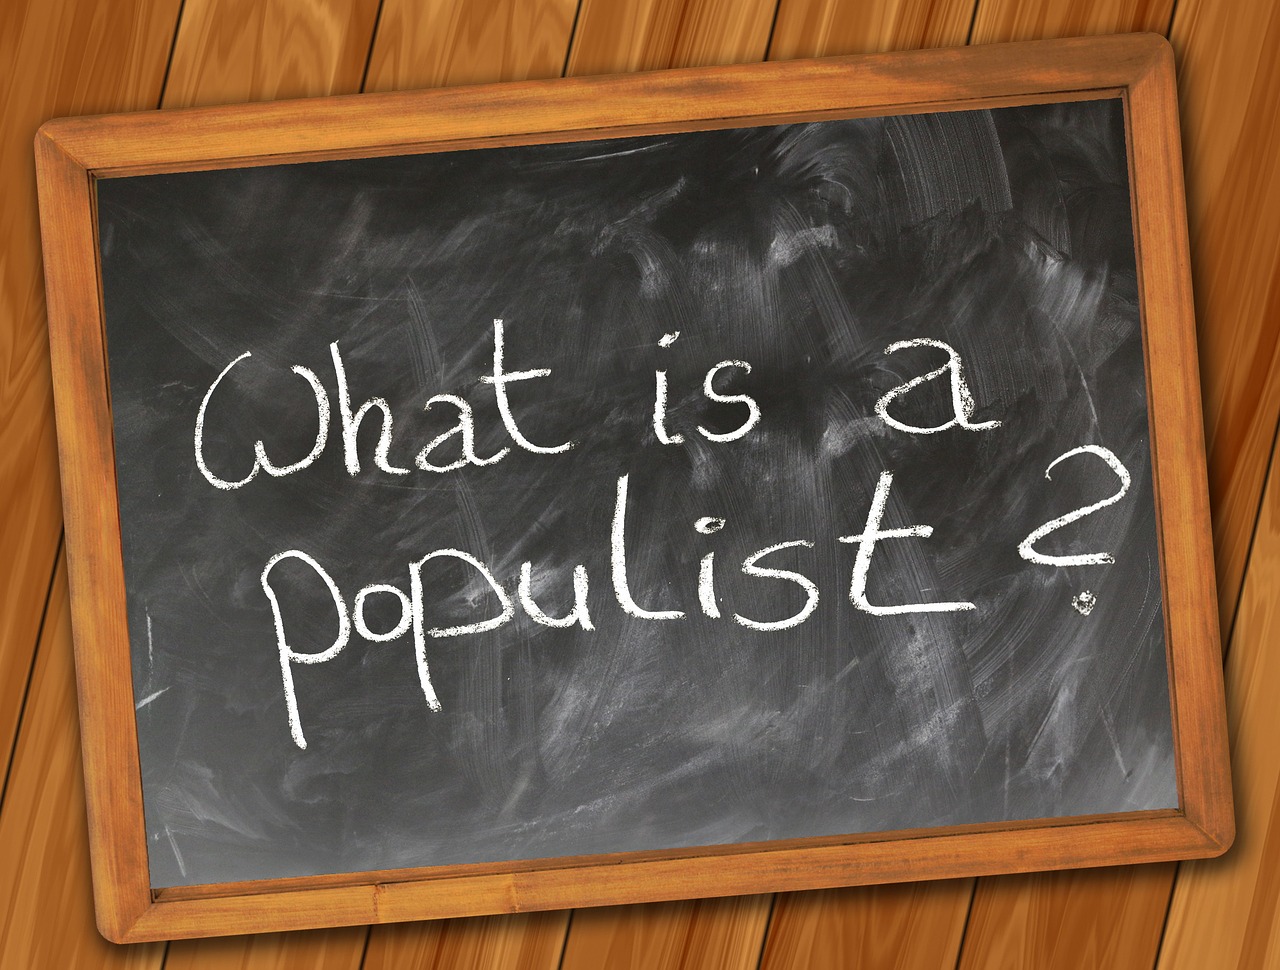 Populistinis, Populizmas, Klausimas, Lenta, Mokykla, Šūkis, Politika, Retorika, Ideologija, Galia